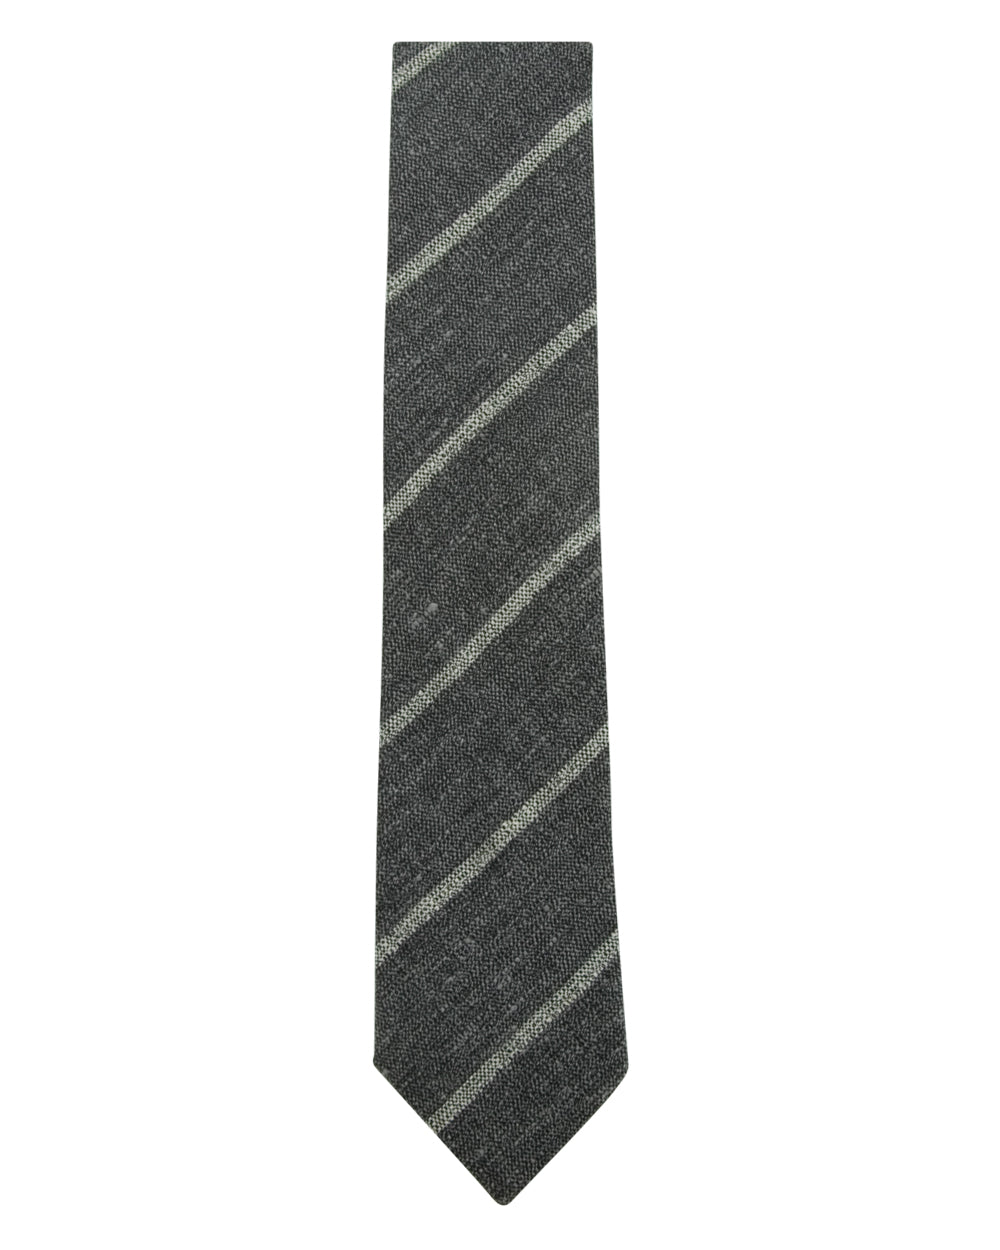 Charcoal Gray Stripe Tie